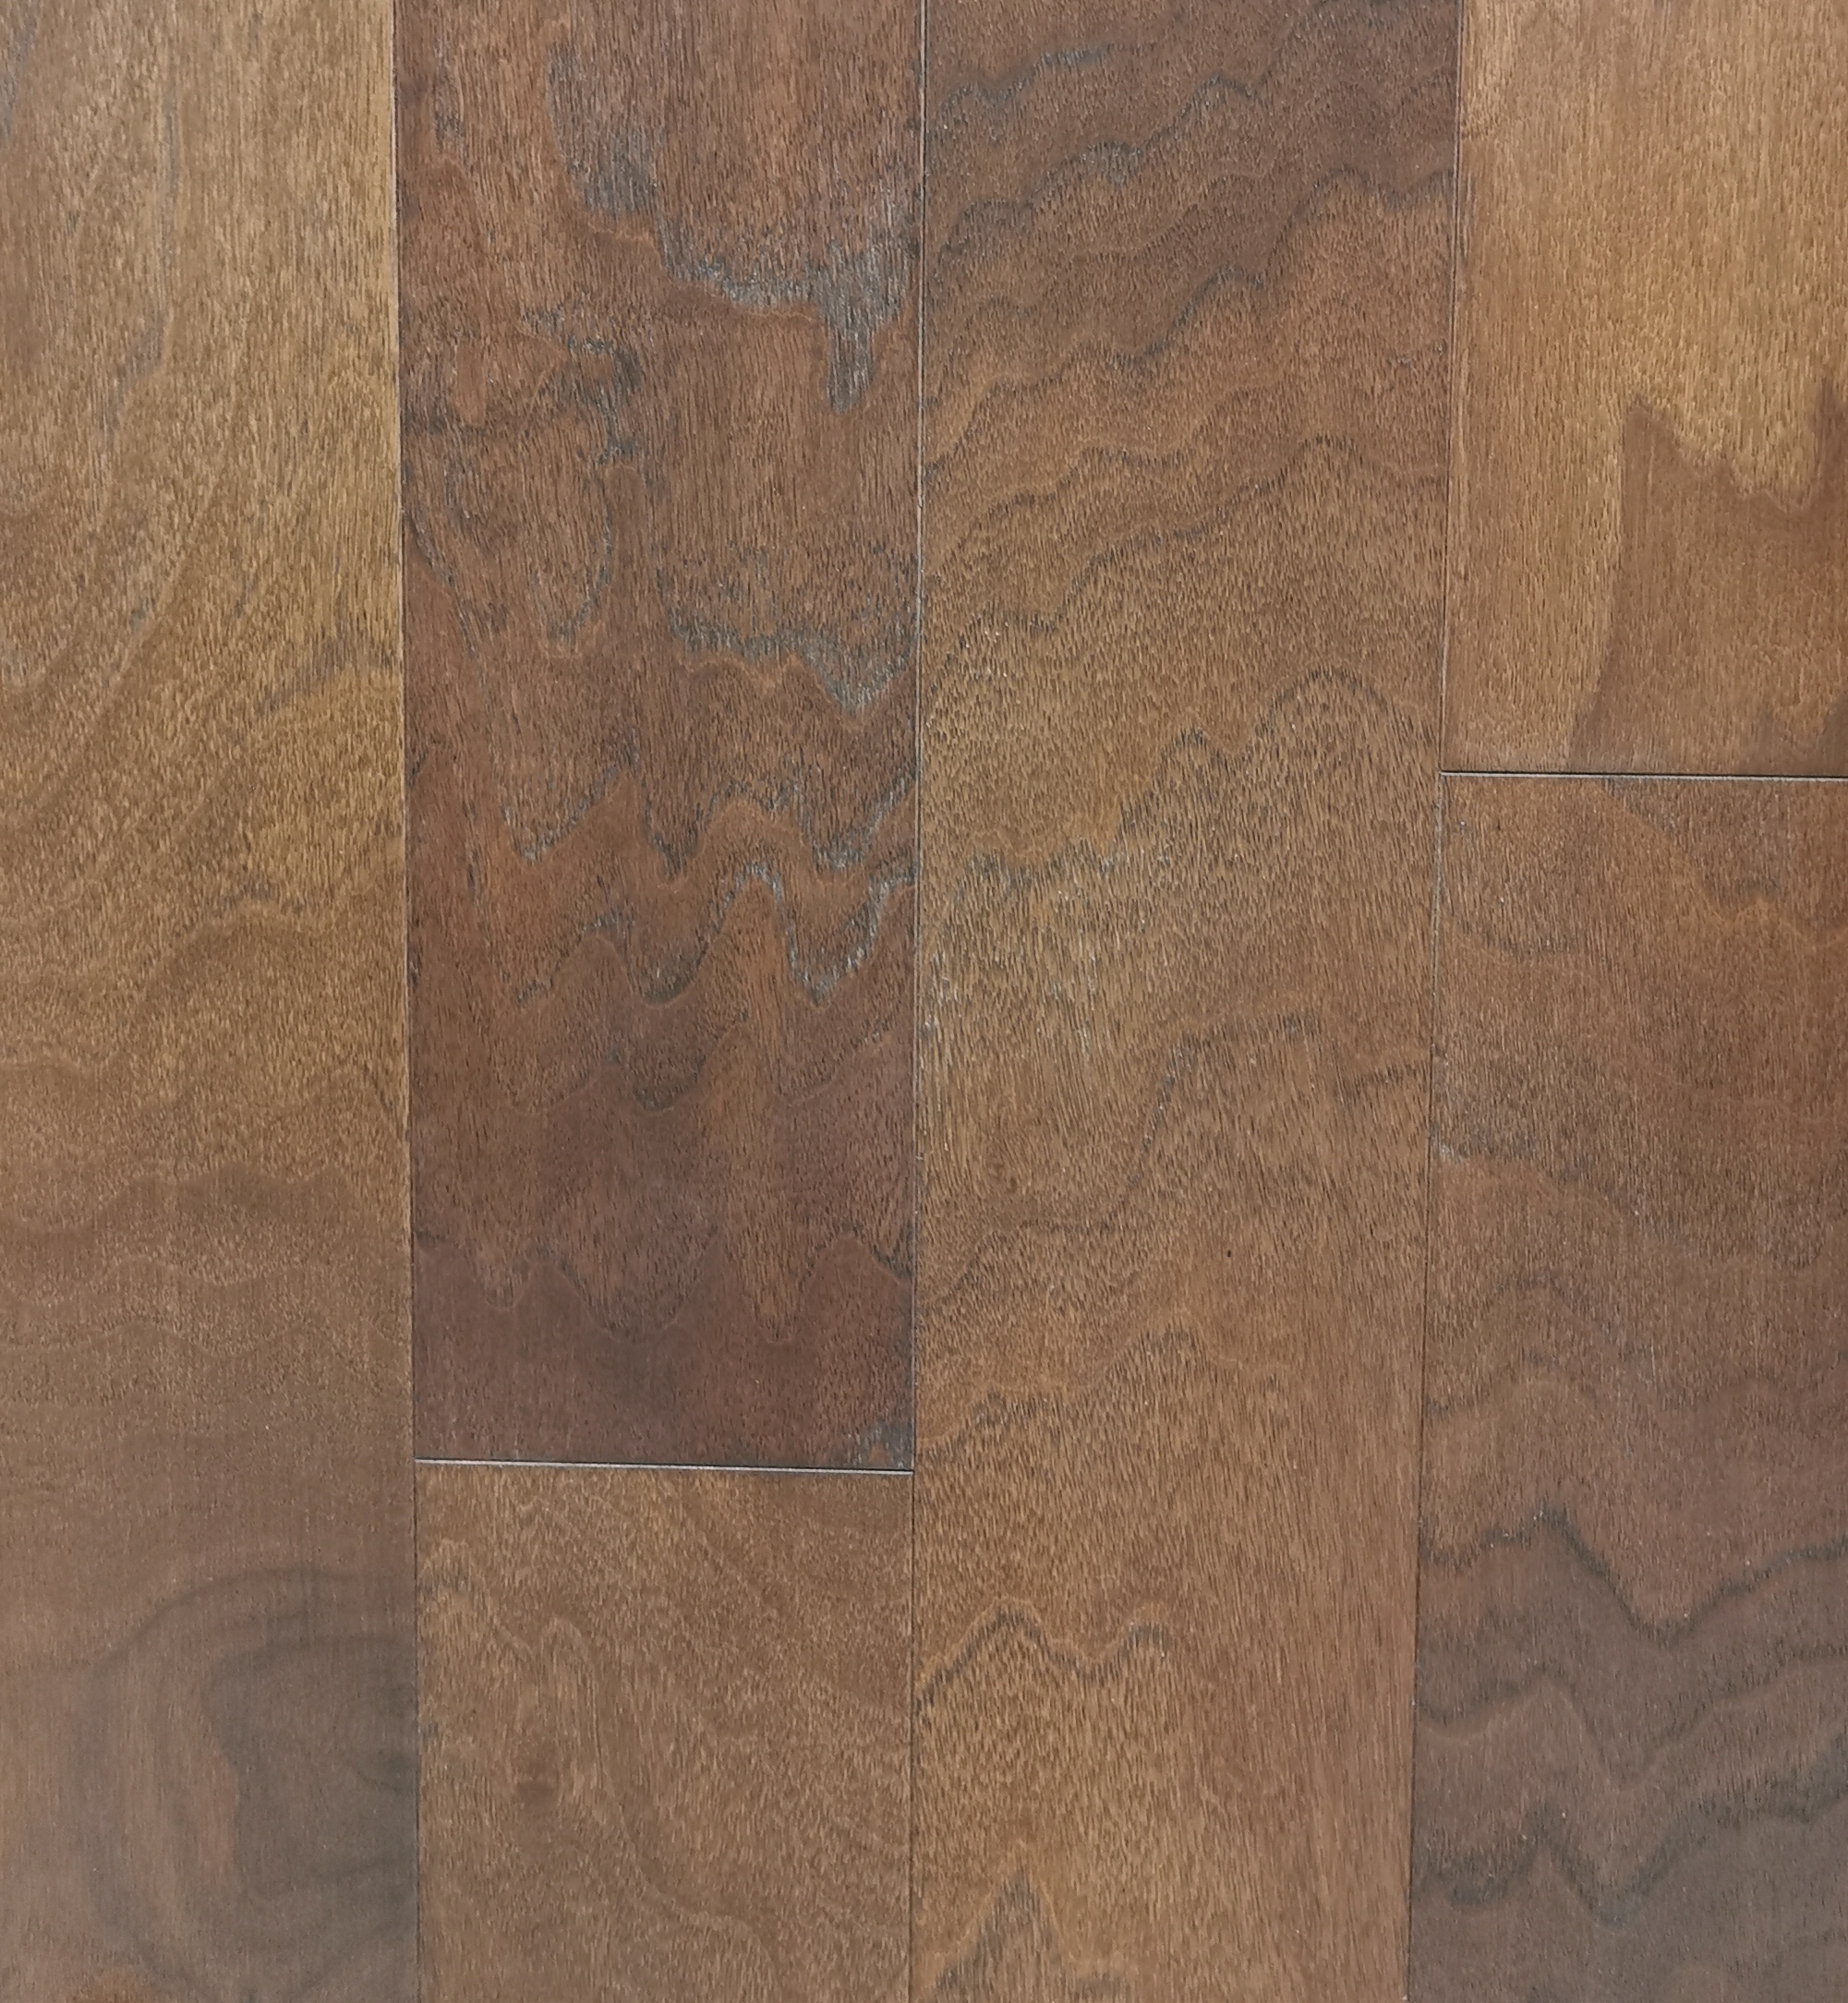 Green Touch American Walnut Engineered Hardwood Flooring